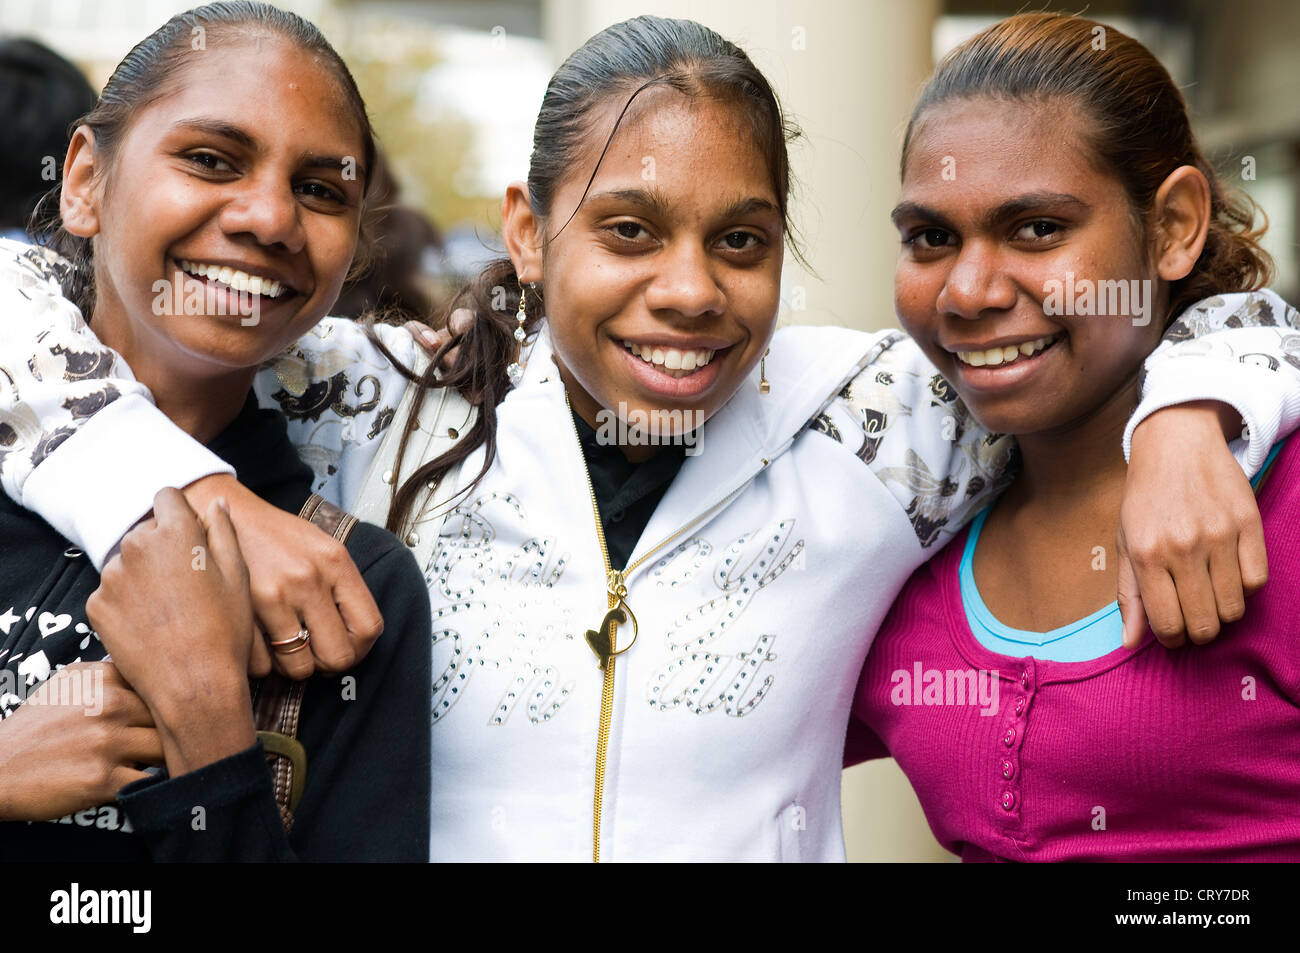 aboriginal girls murray street mall perth western australia Stock Photo